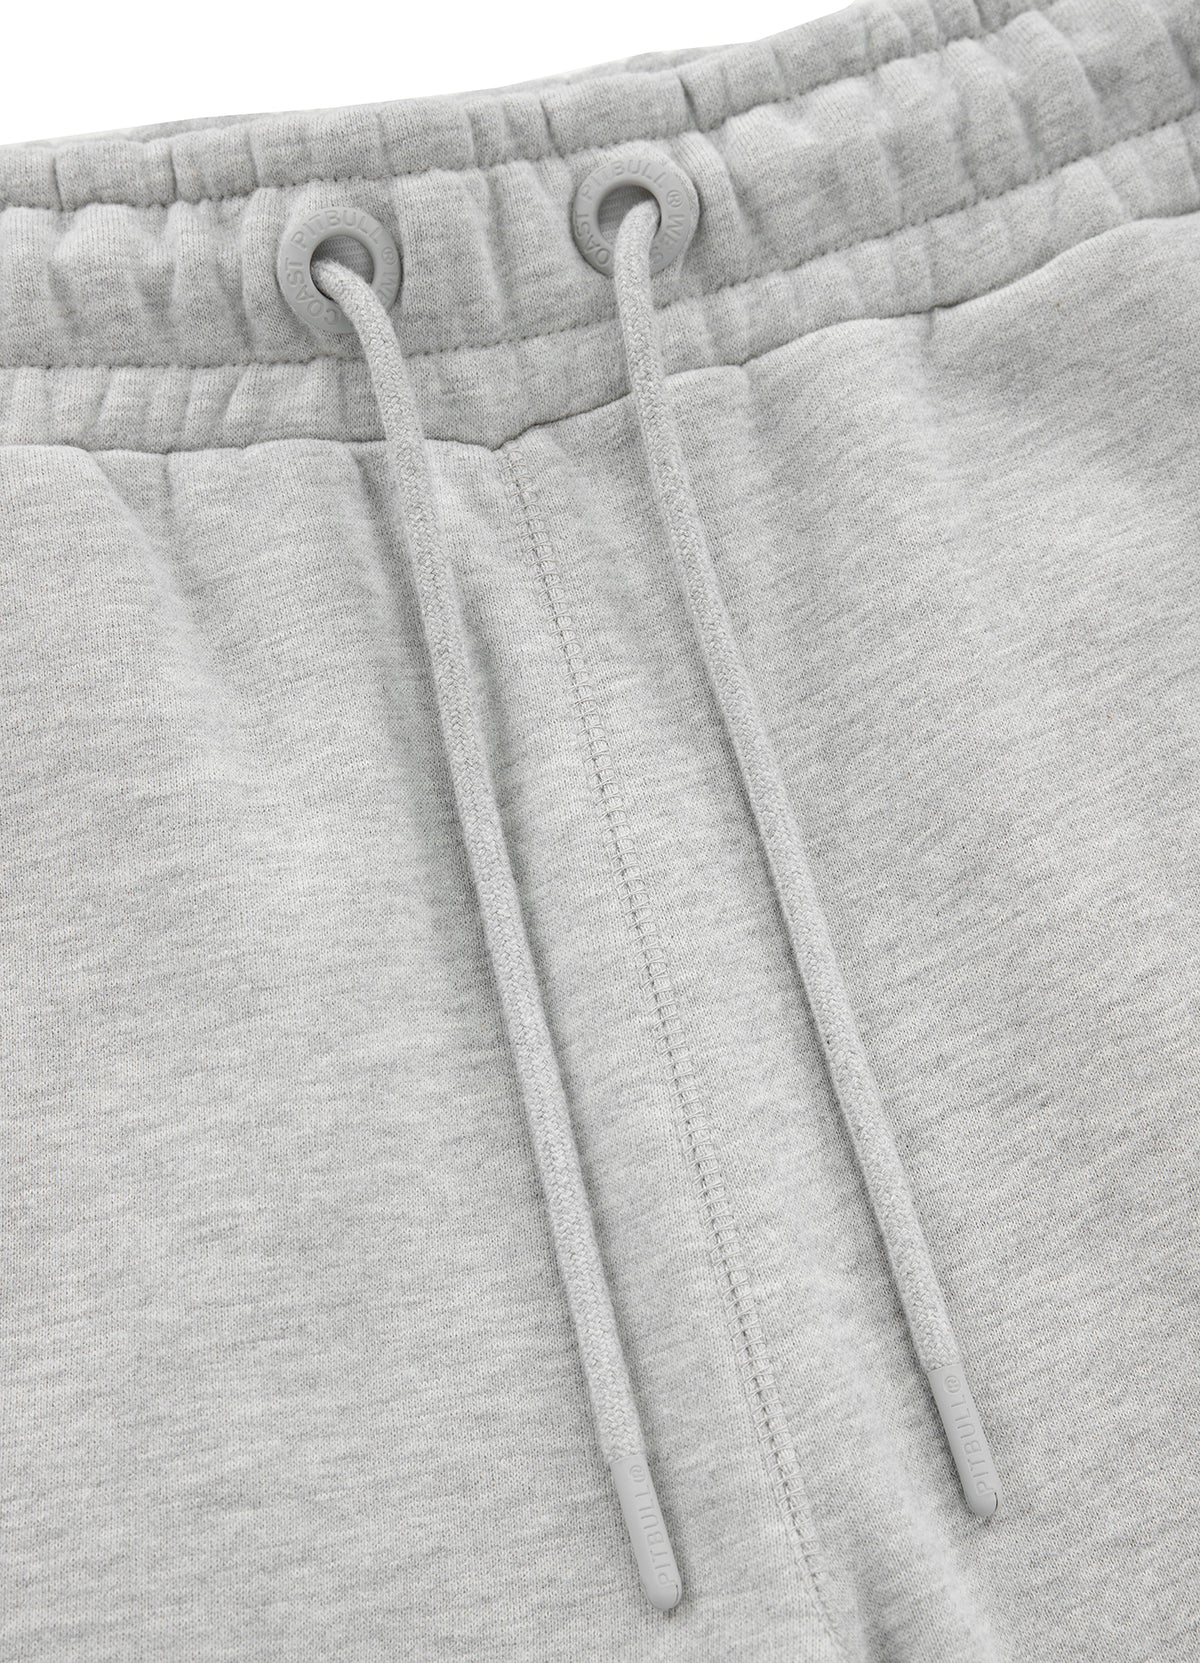 NEW LOGO Oversize Grey Tack Pants - Pitbull West Coast International Store 